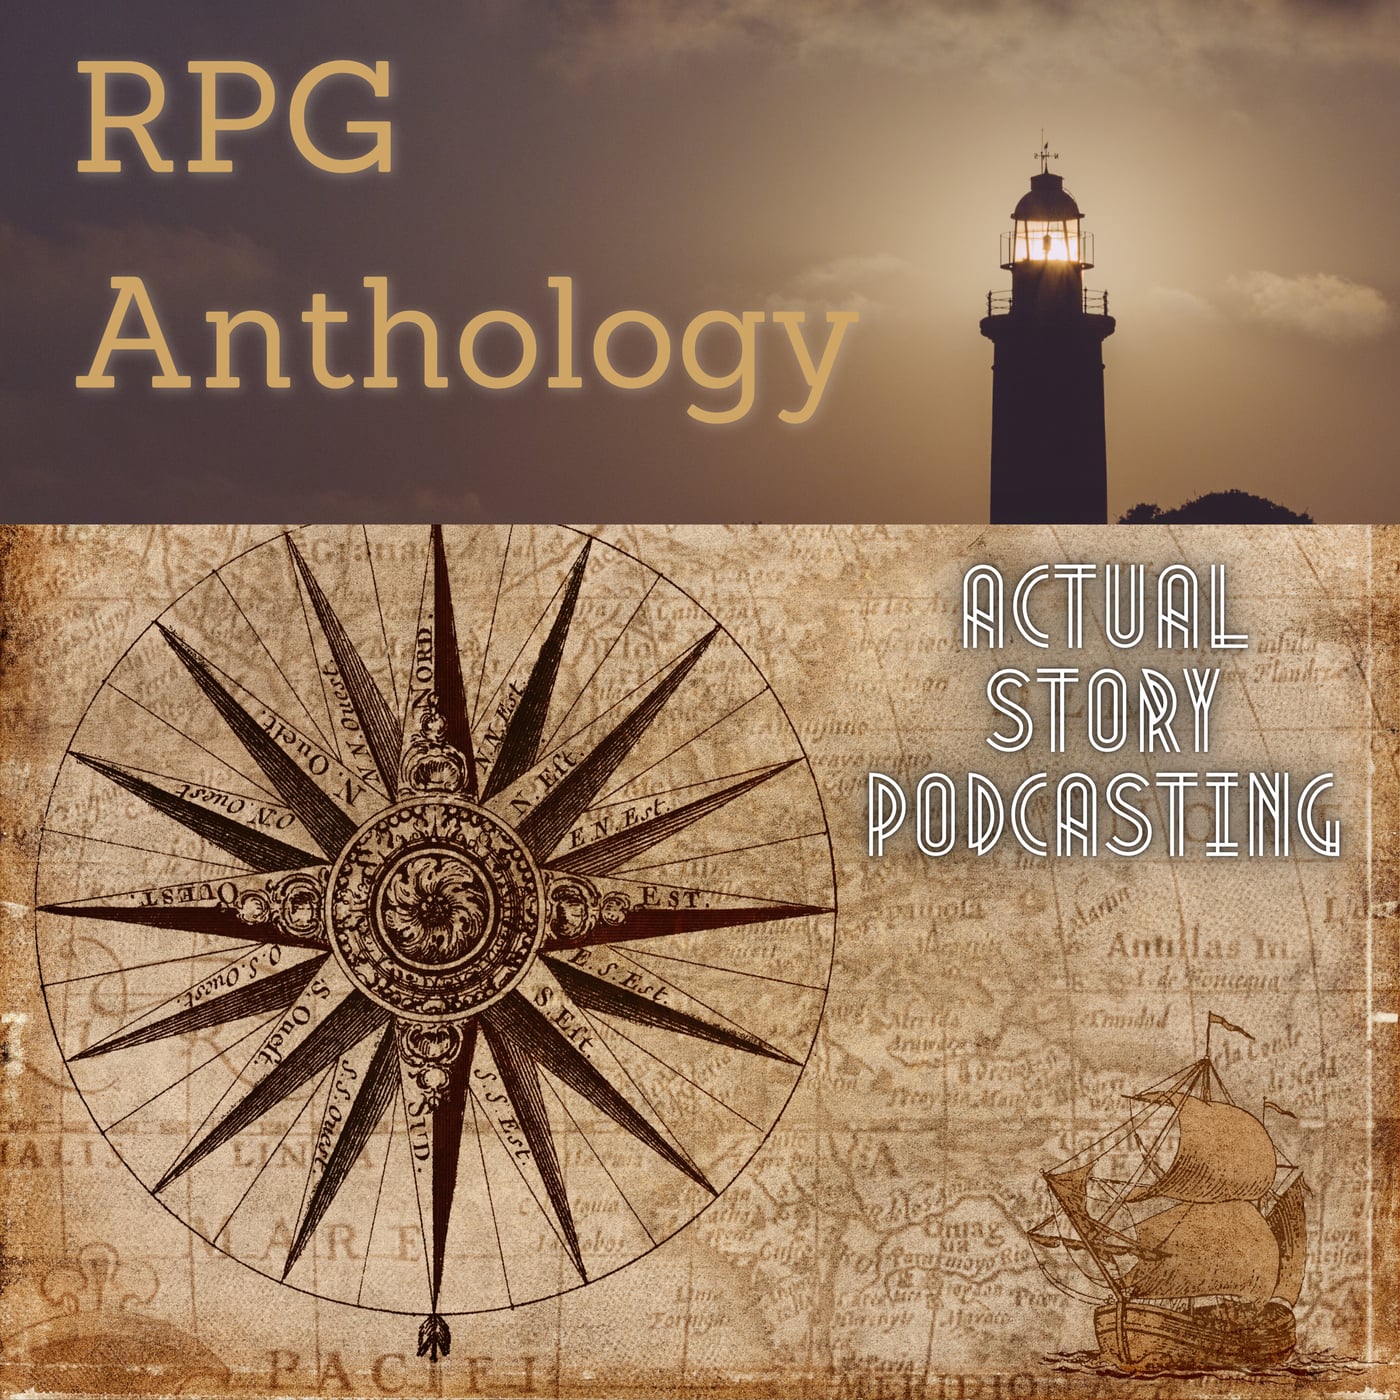 Show artwork for RPG Anthology